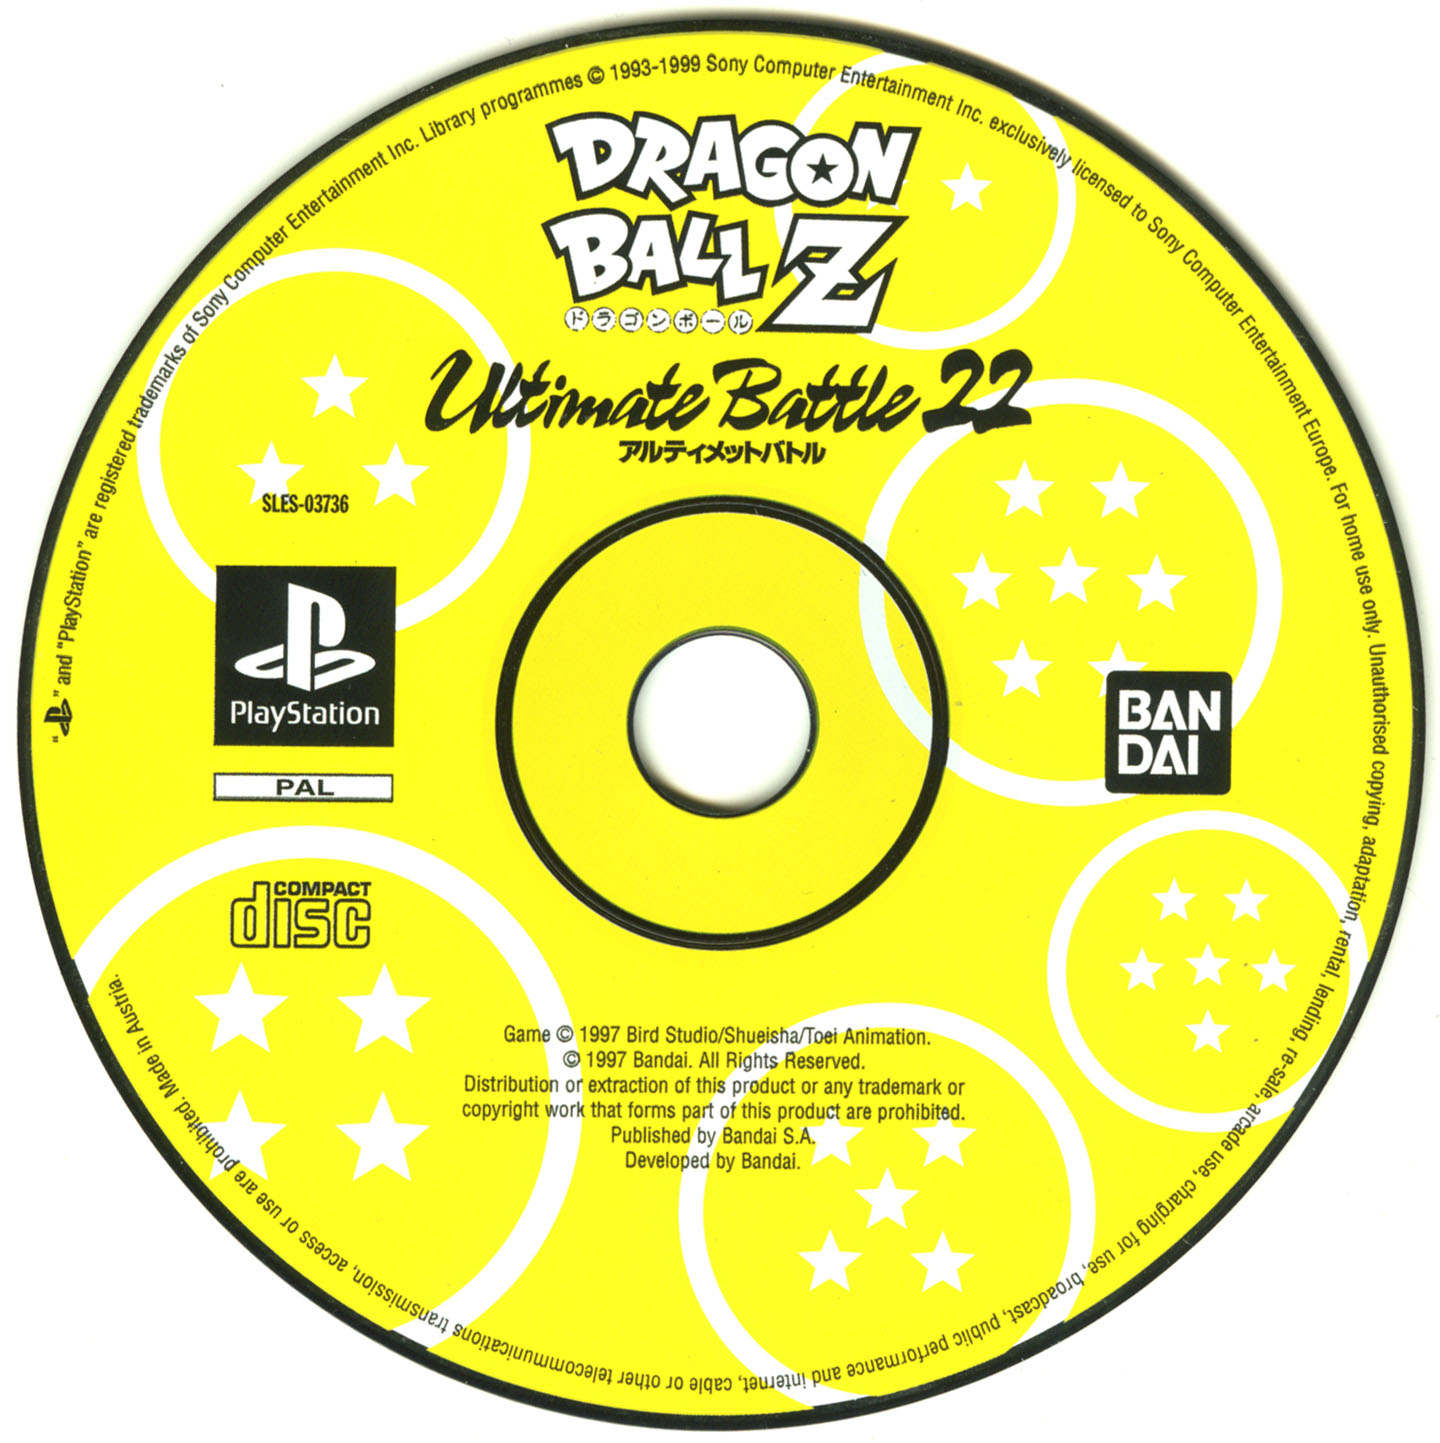 Dragon Ball Z: Ultimate Battle 22 Details - LaunchBox Games Database